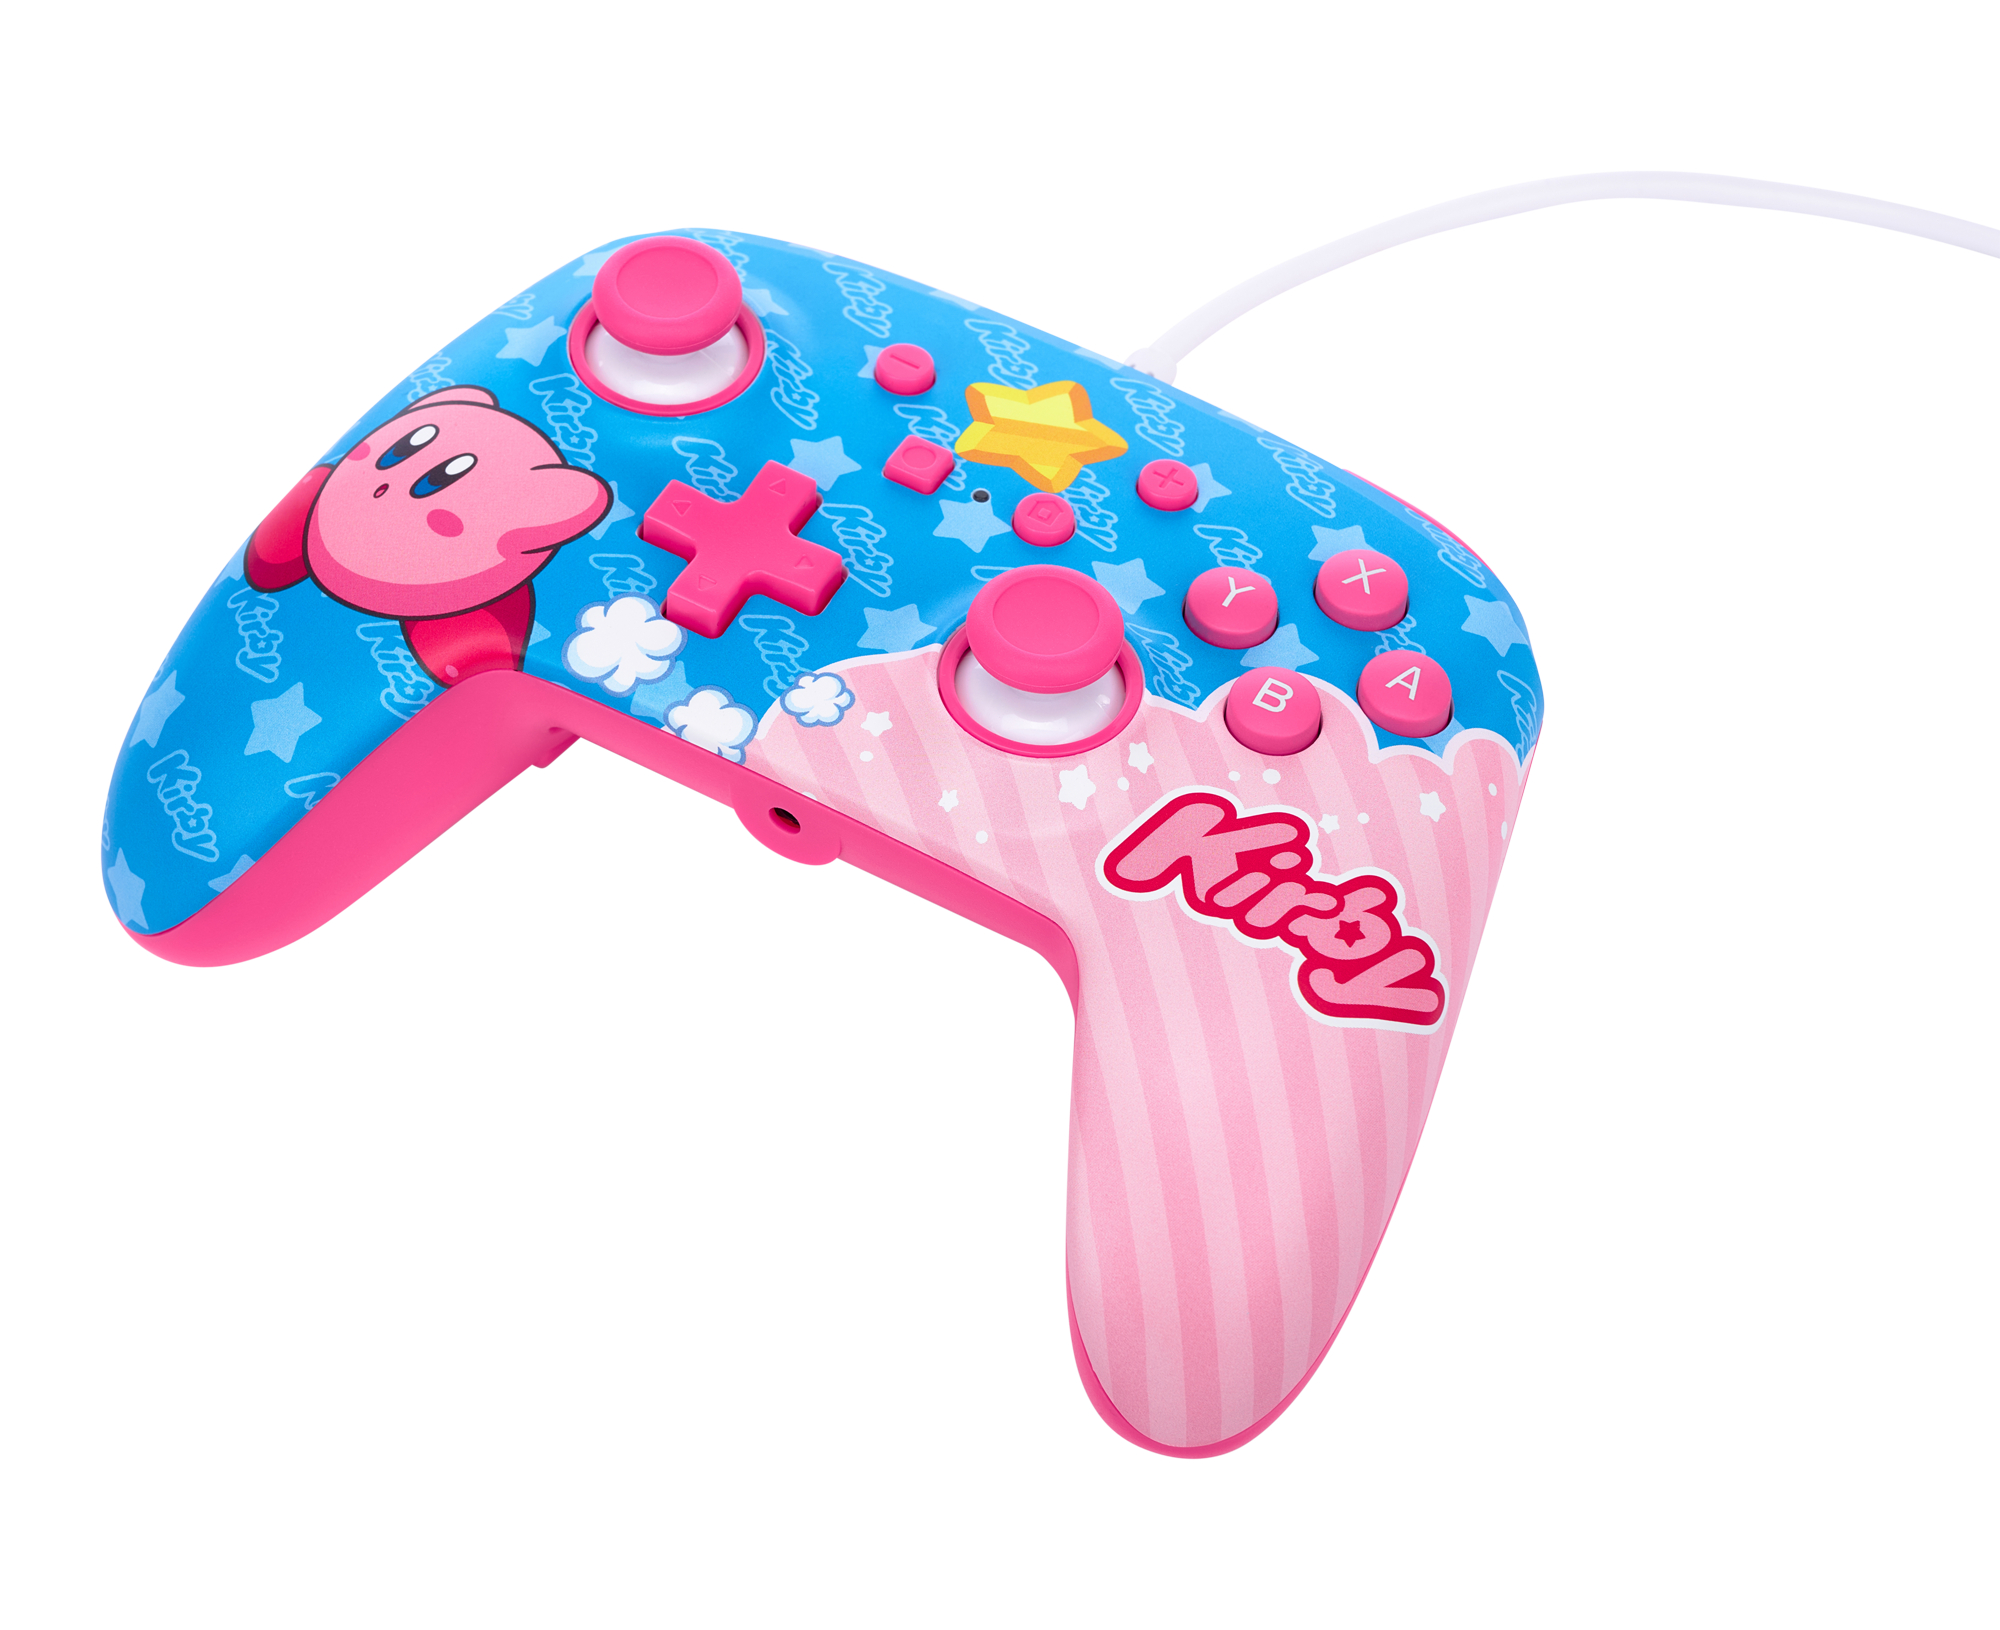 POWERA kabelgebundener Controller- Kirby Controller Nintendo Switch OLED, Mehrfarbig Nintendo für Switch